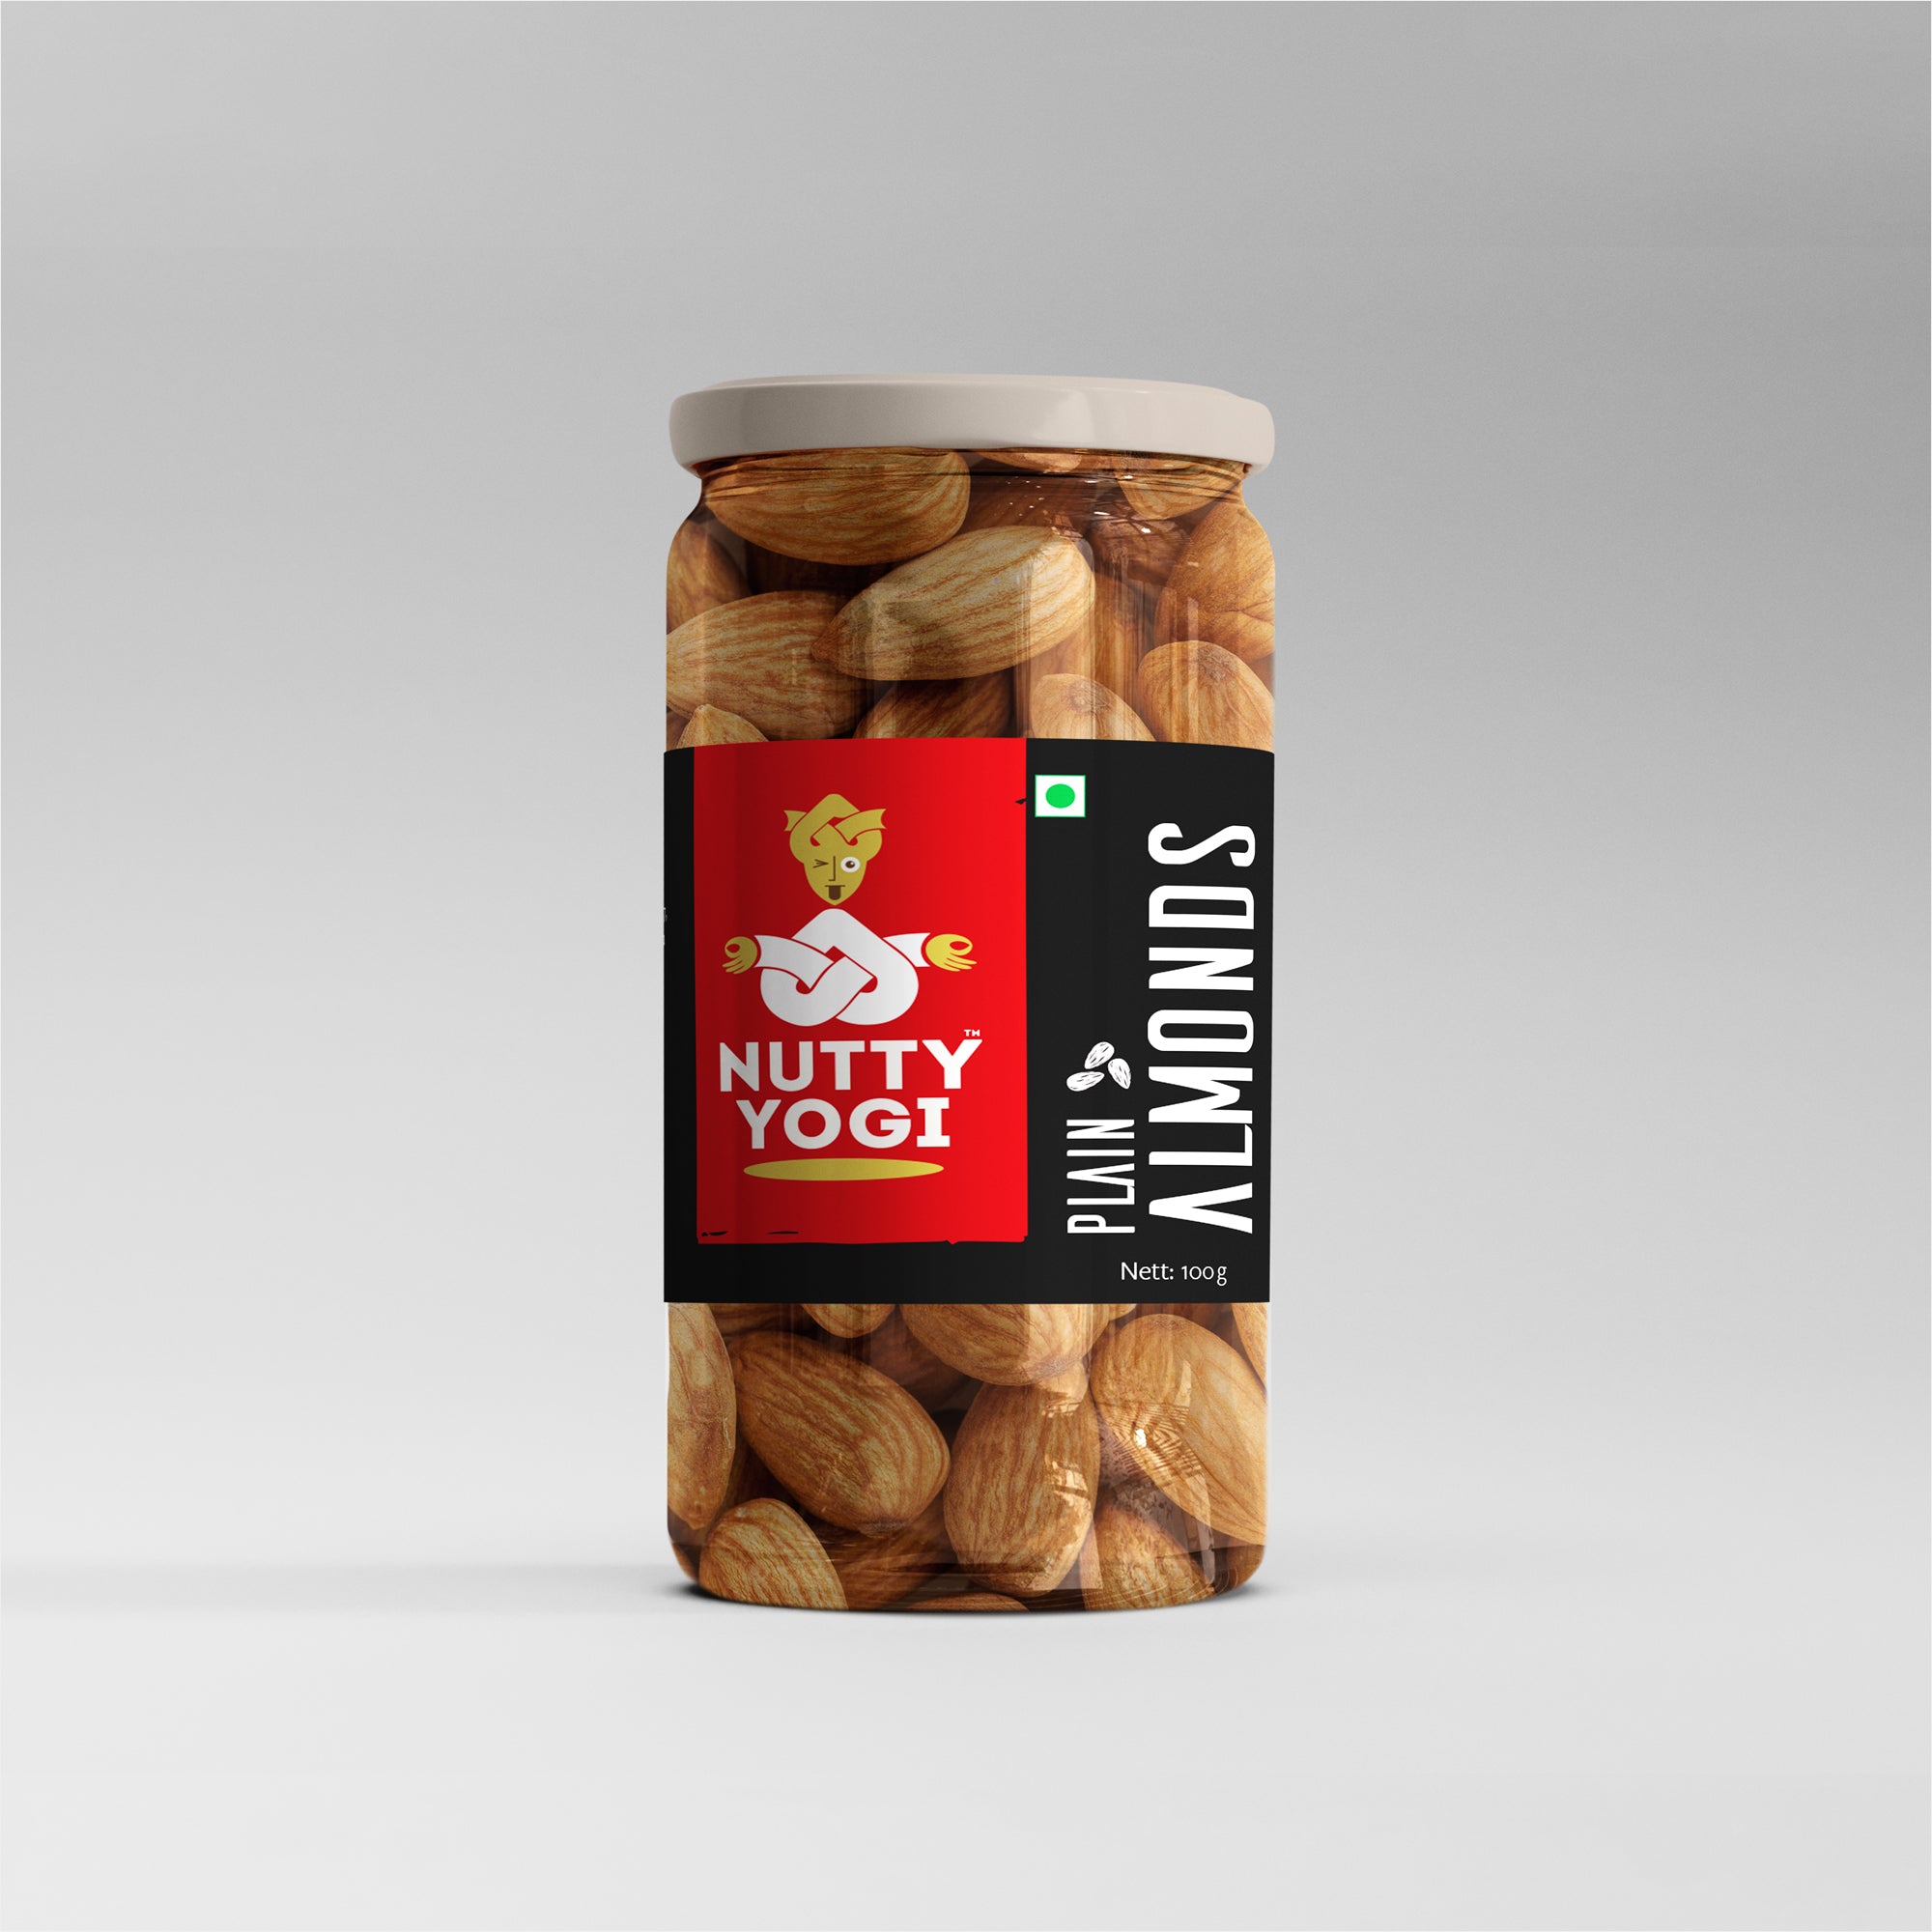 Nutty Yogi Festive Nuts Combo (Cashew, Almonds, Pistachios, Green Raisins) 100g each